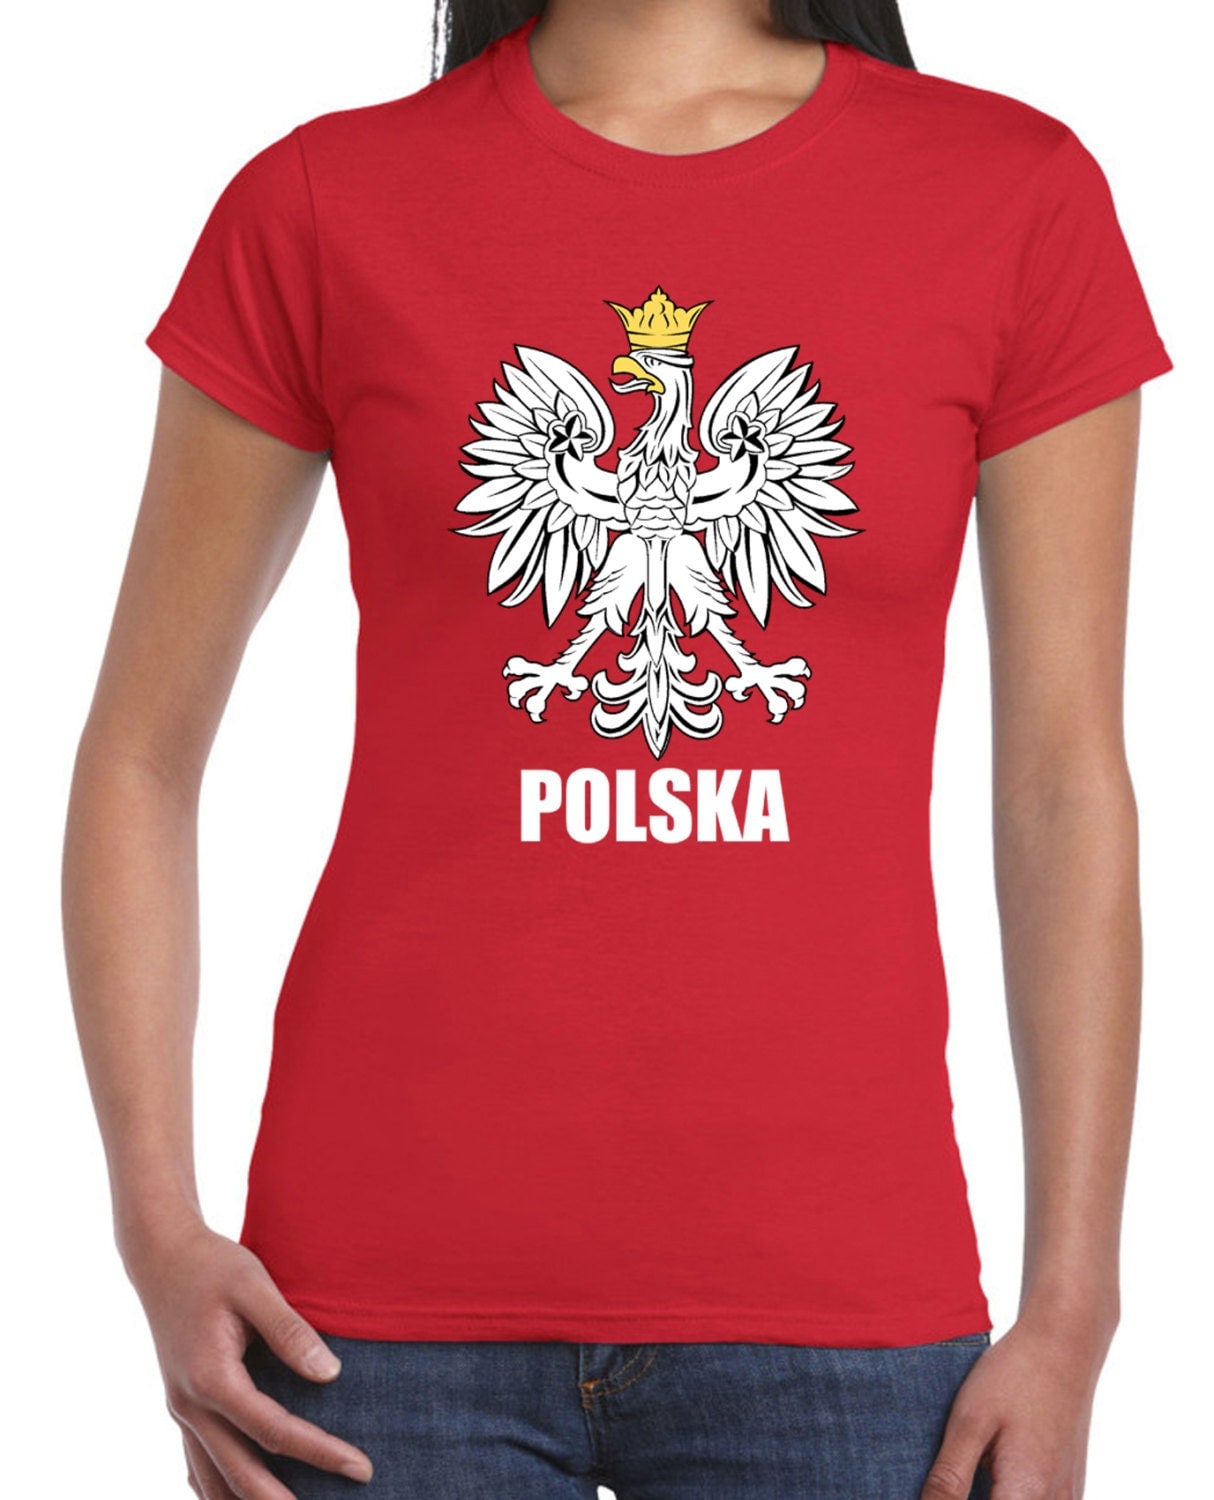 Polish Eagle Polska Flag Women's T-Shirt